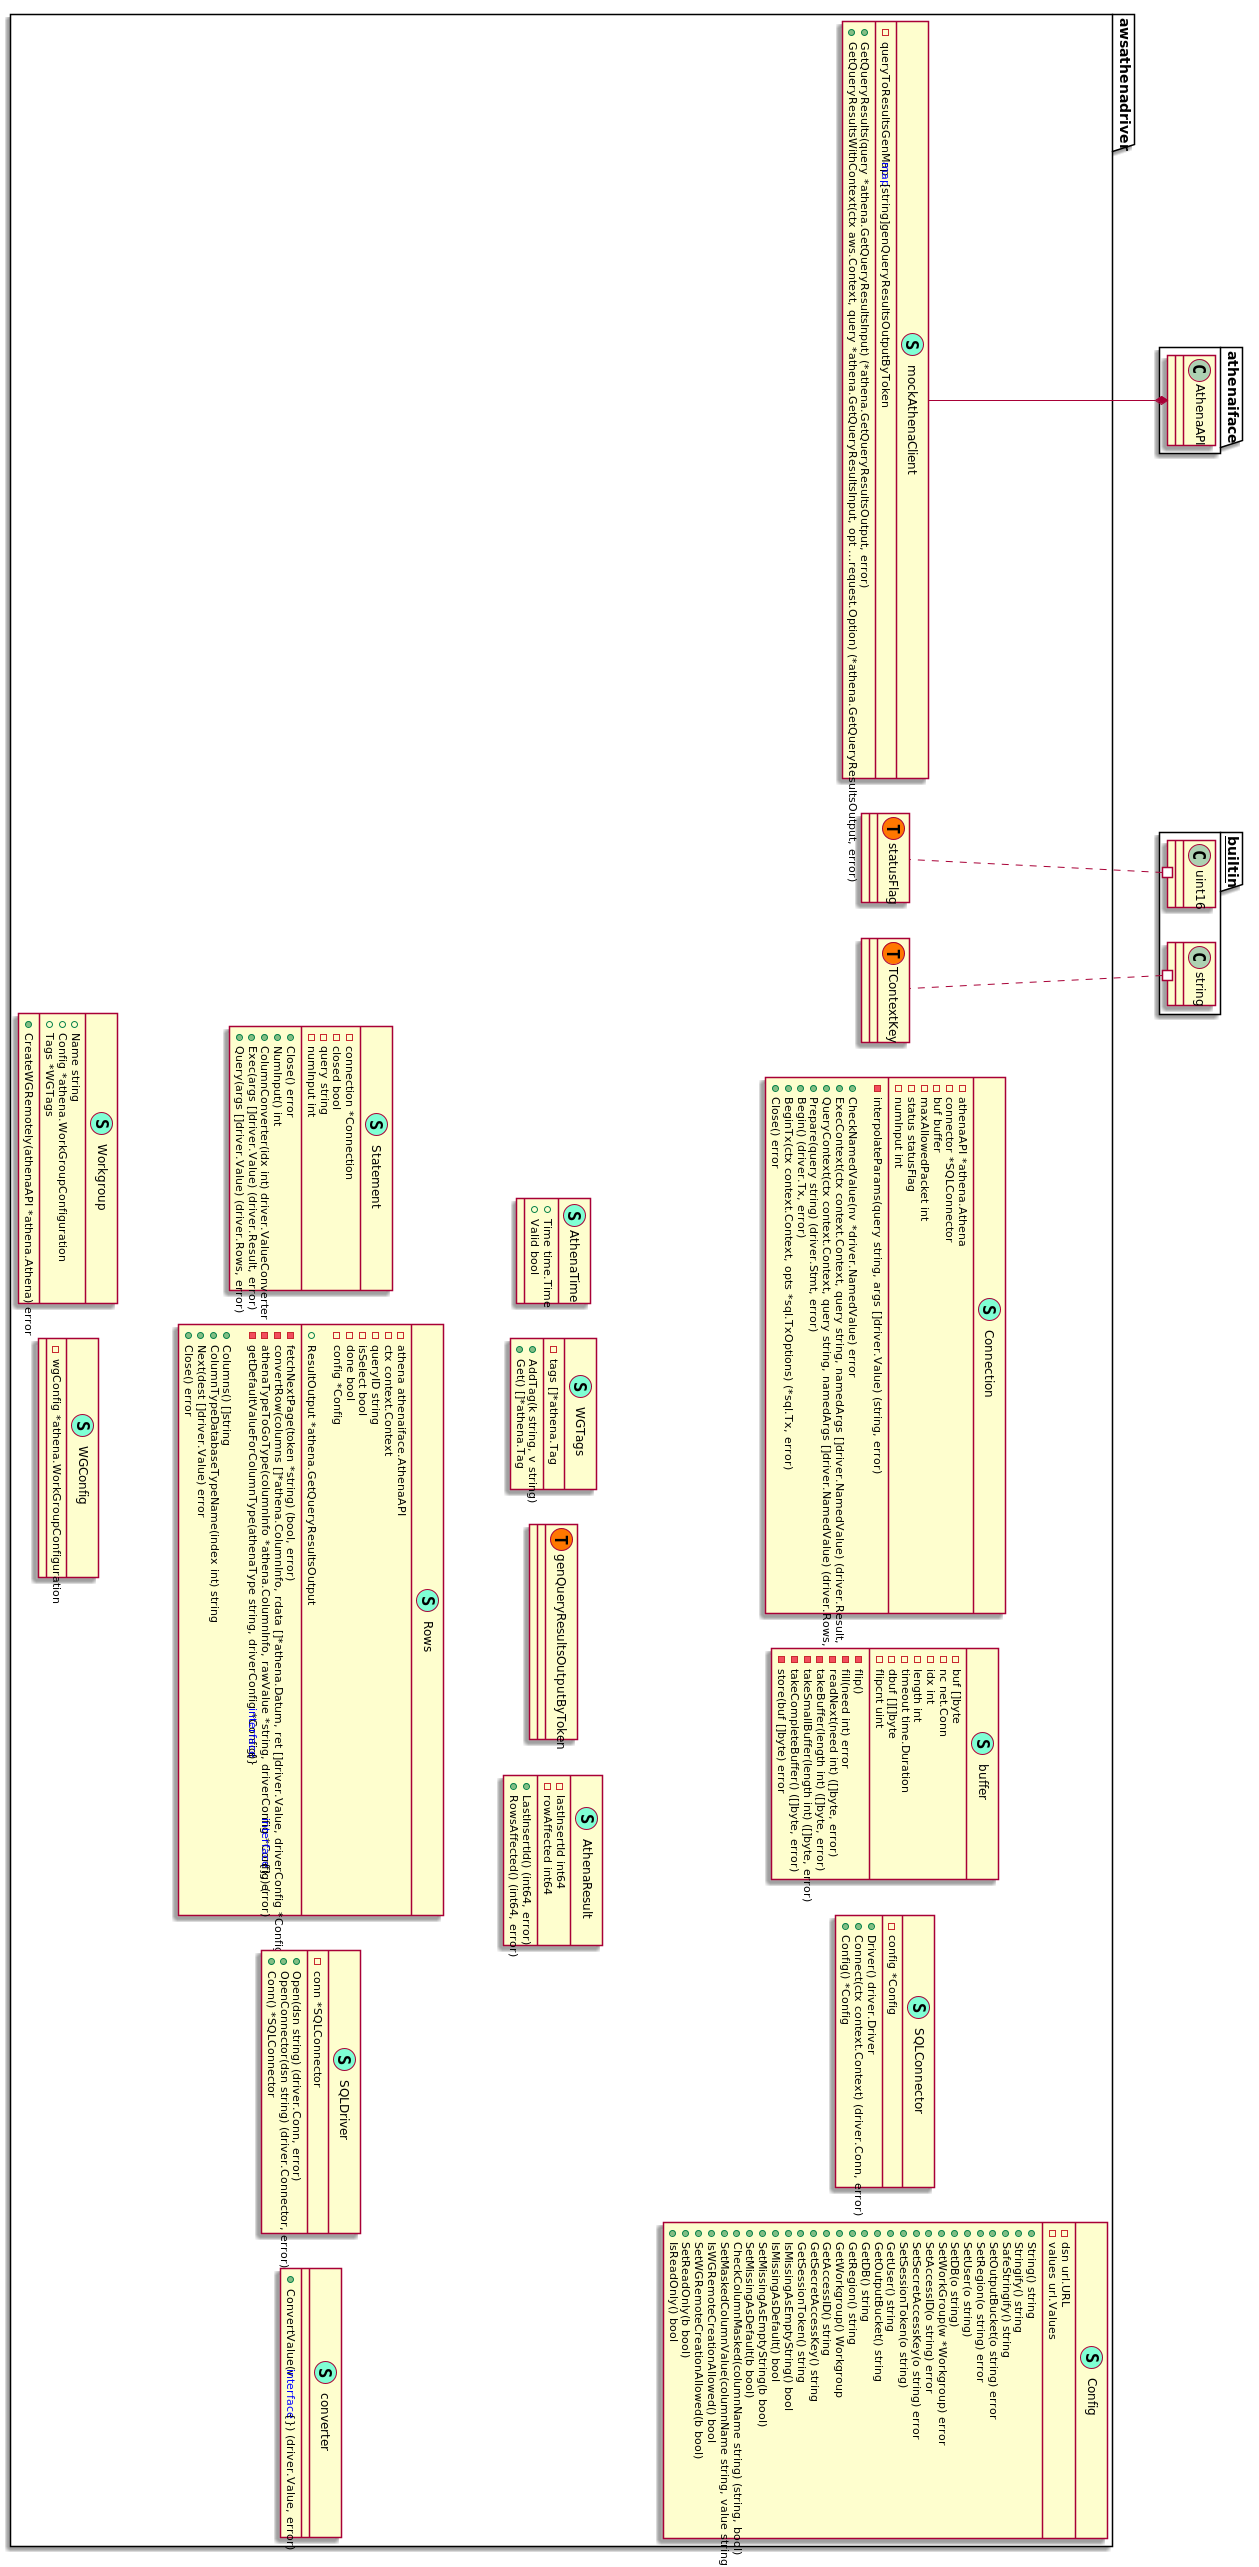 athenadriver Package's UML Class Diagram